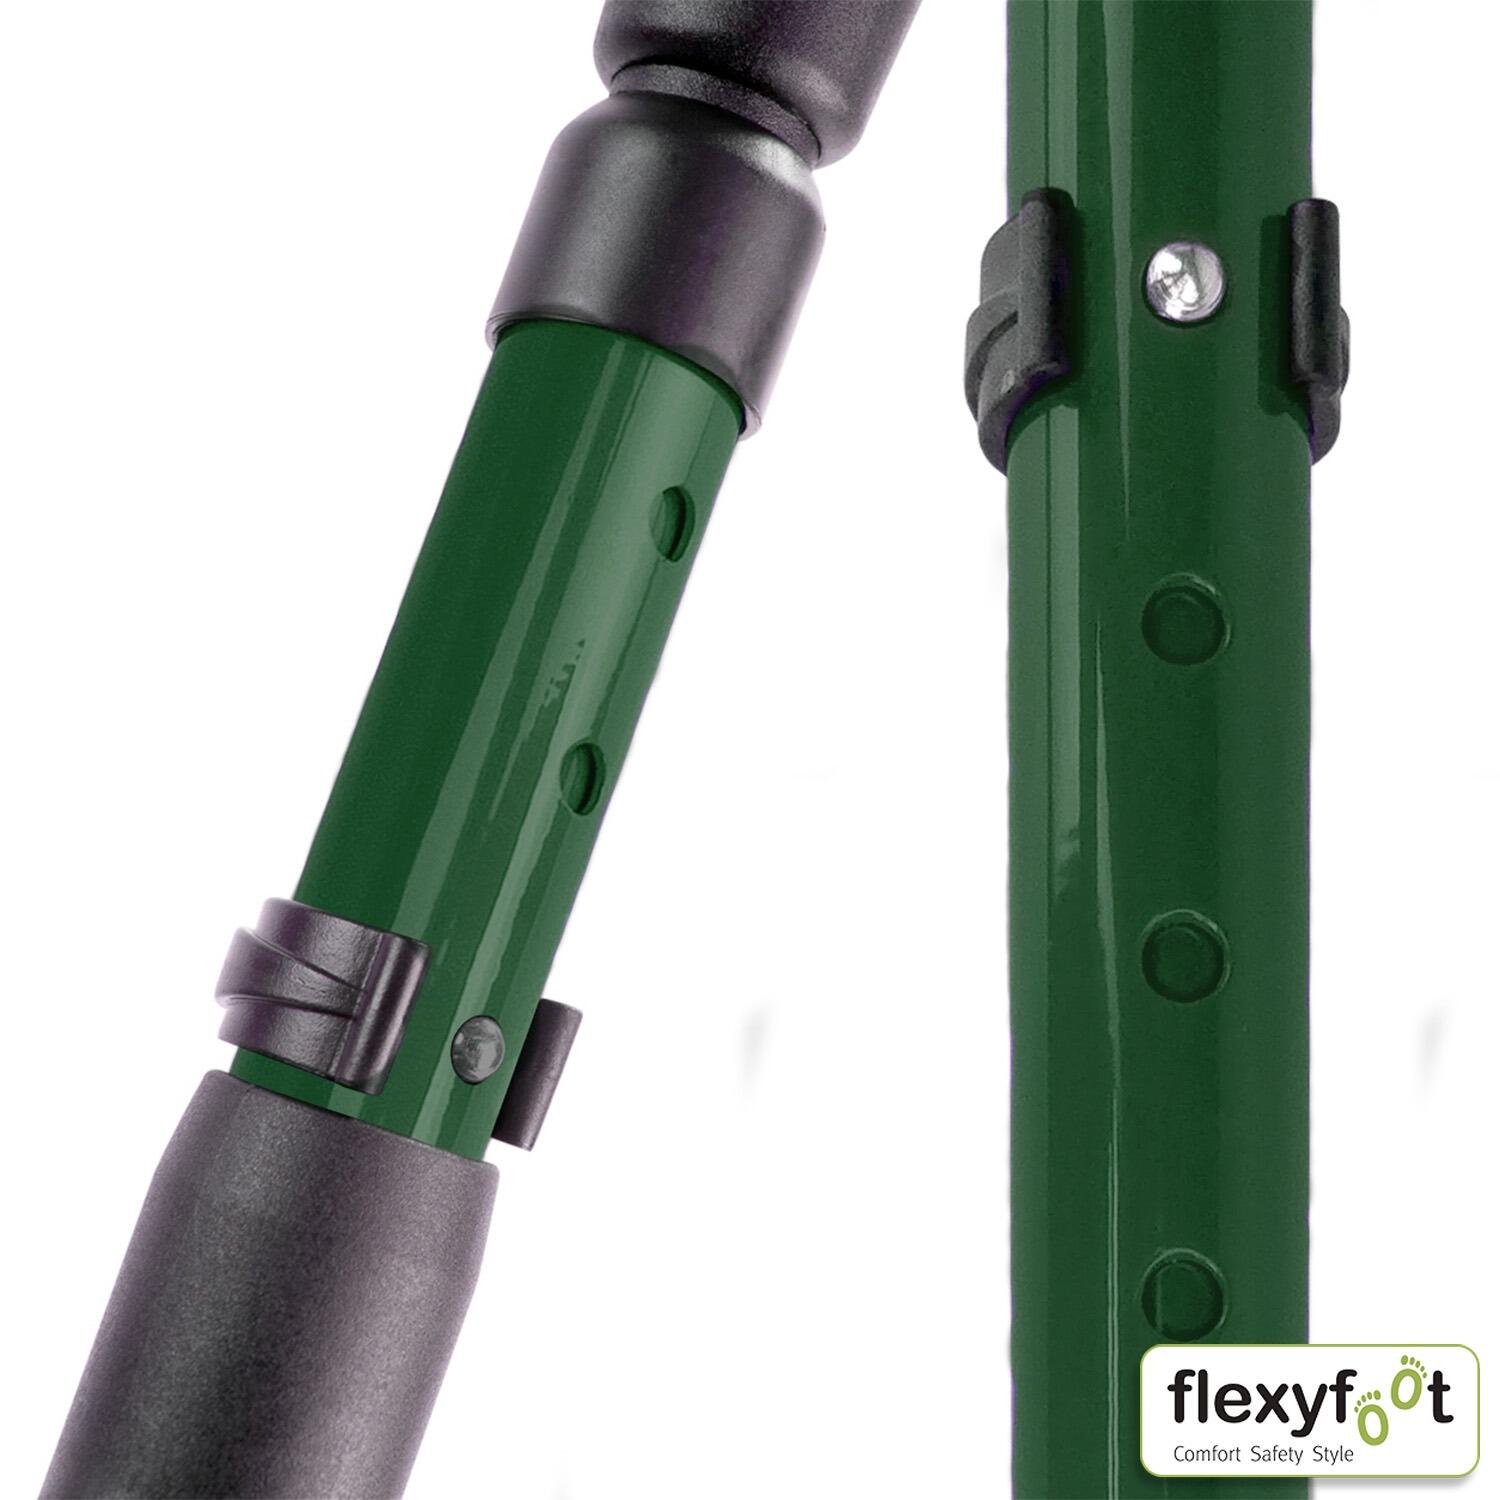 Flexyfoot Soft Grip Shock Absorbing Crutches - British Racing Green - Adjustments